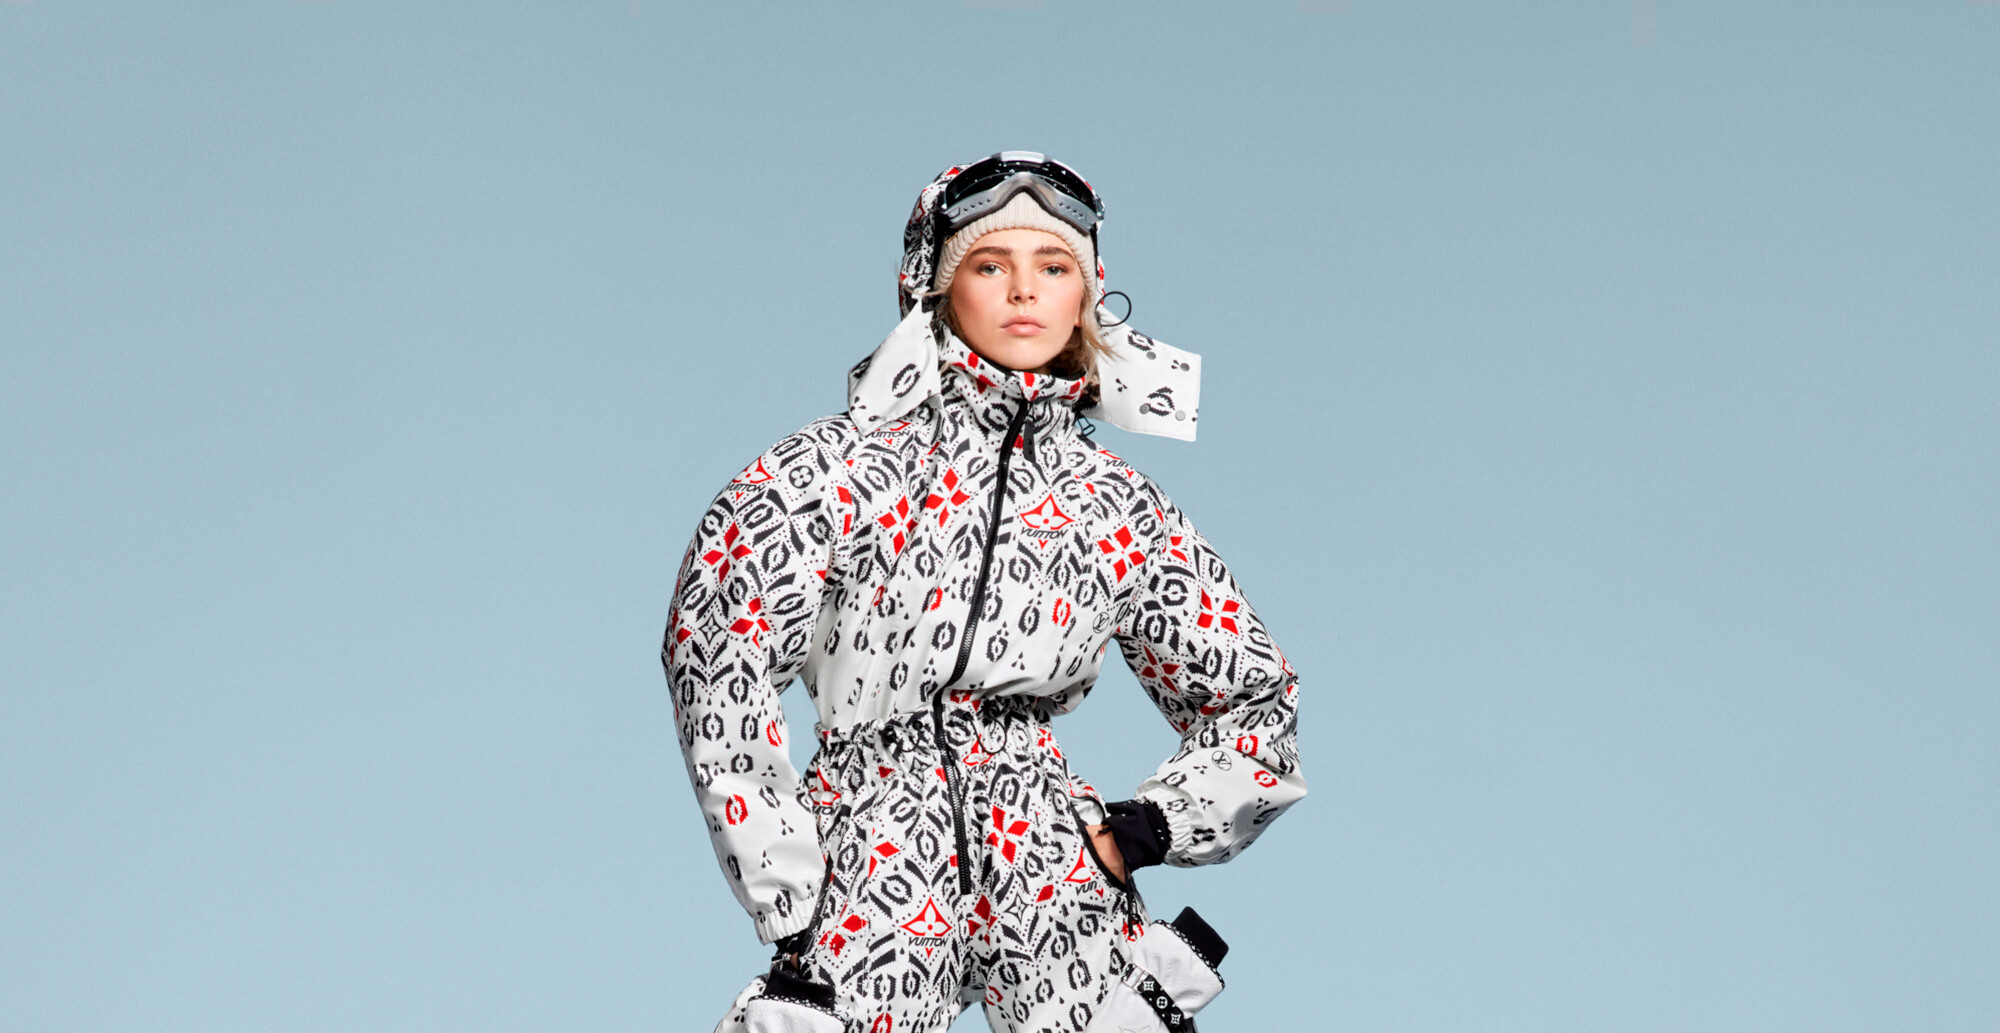 Model wearing high-fashion ski wear